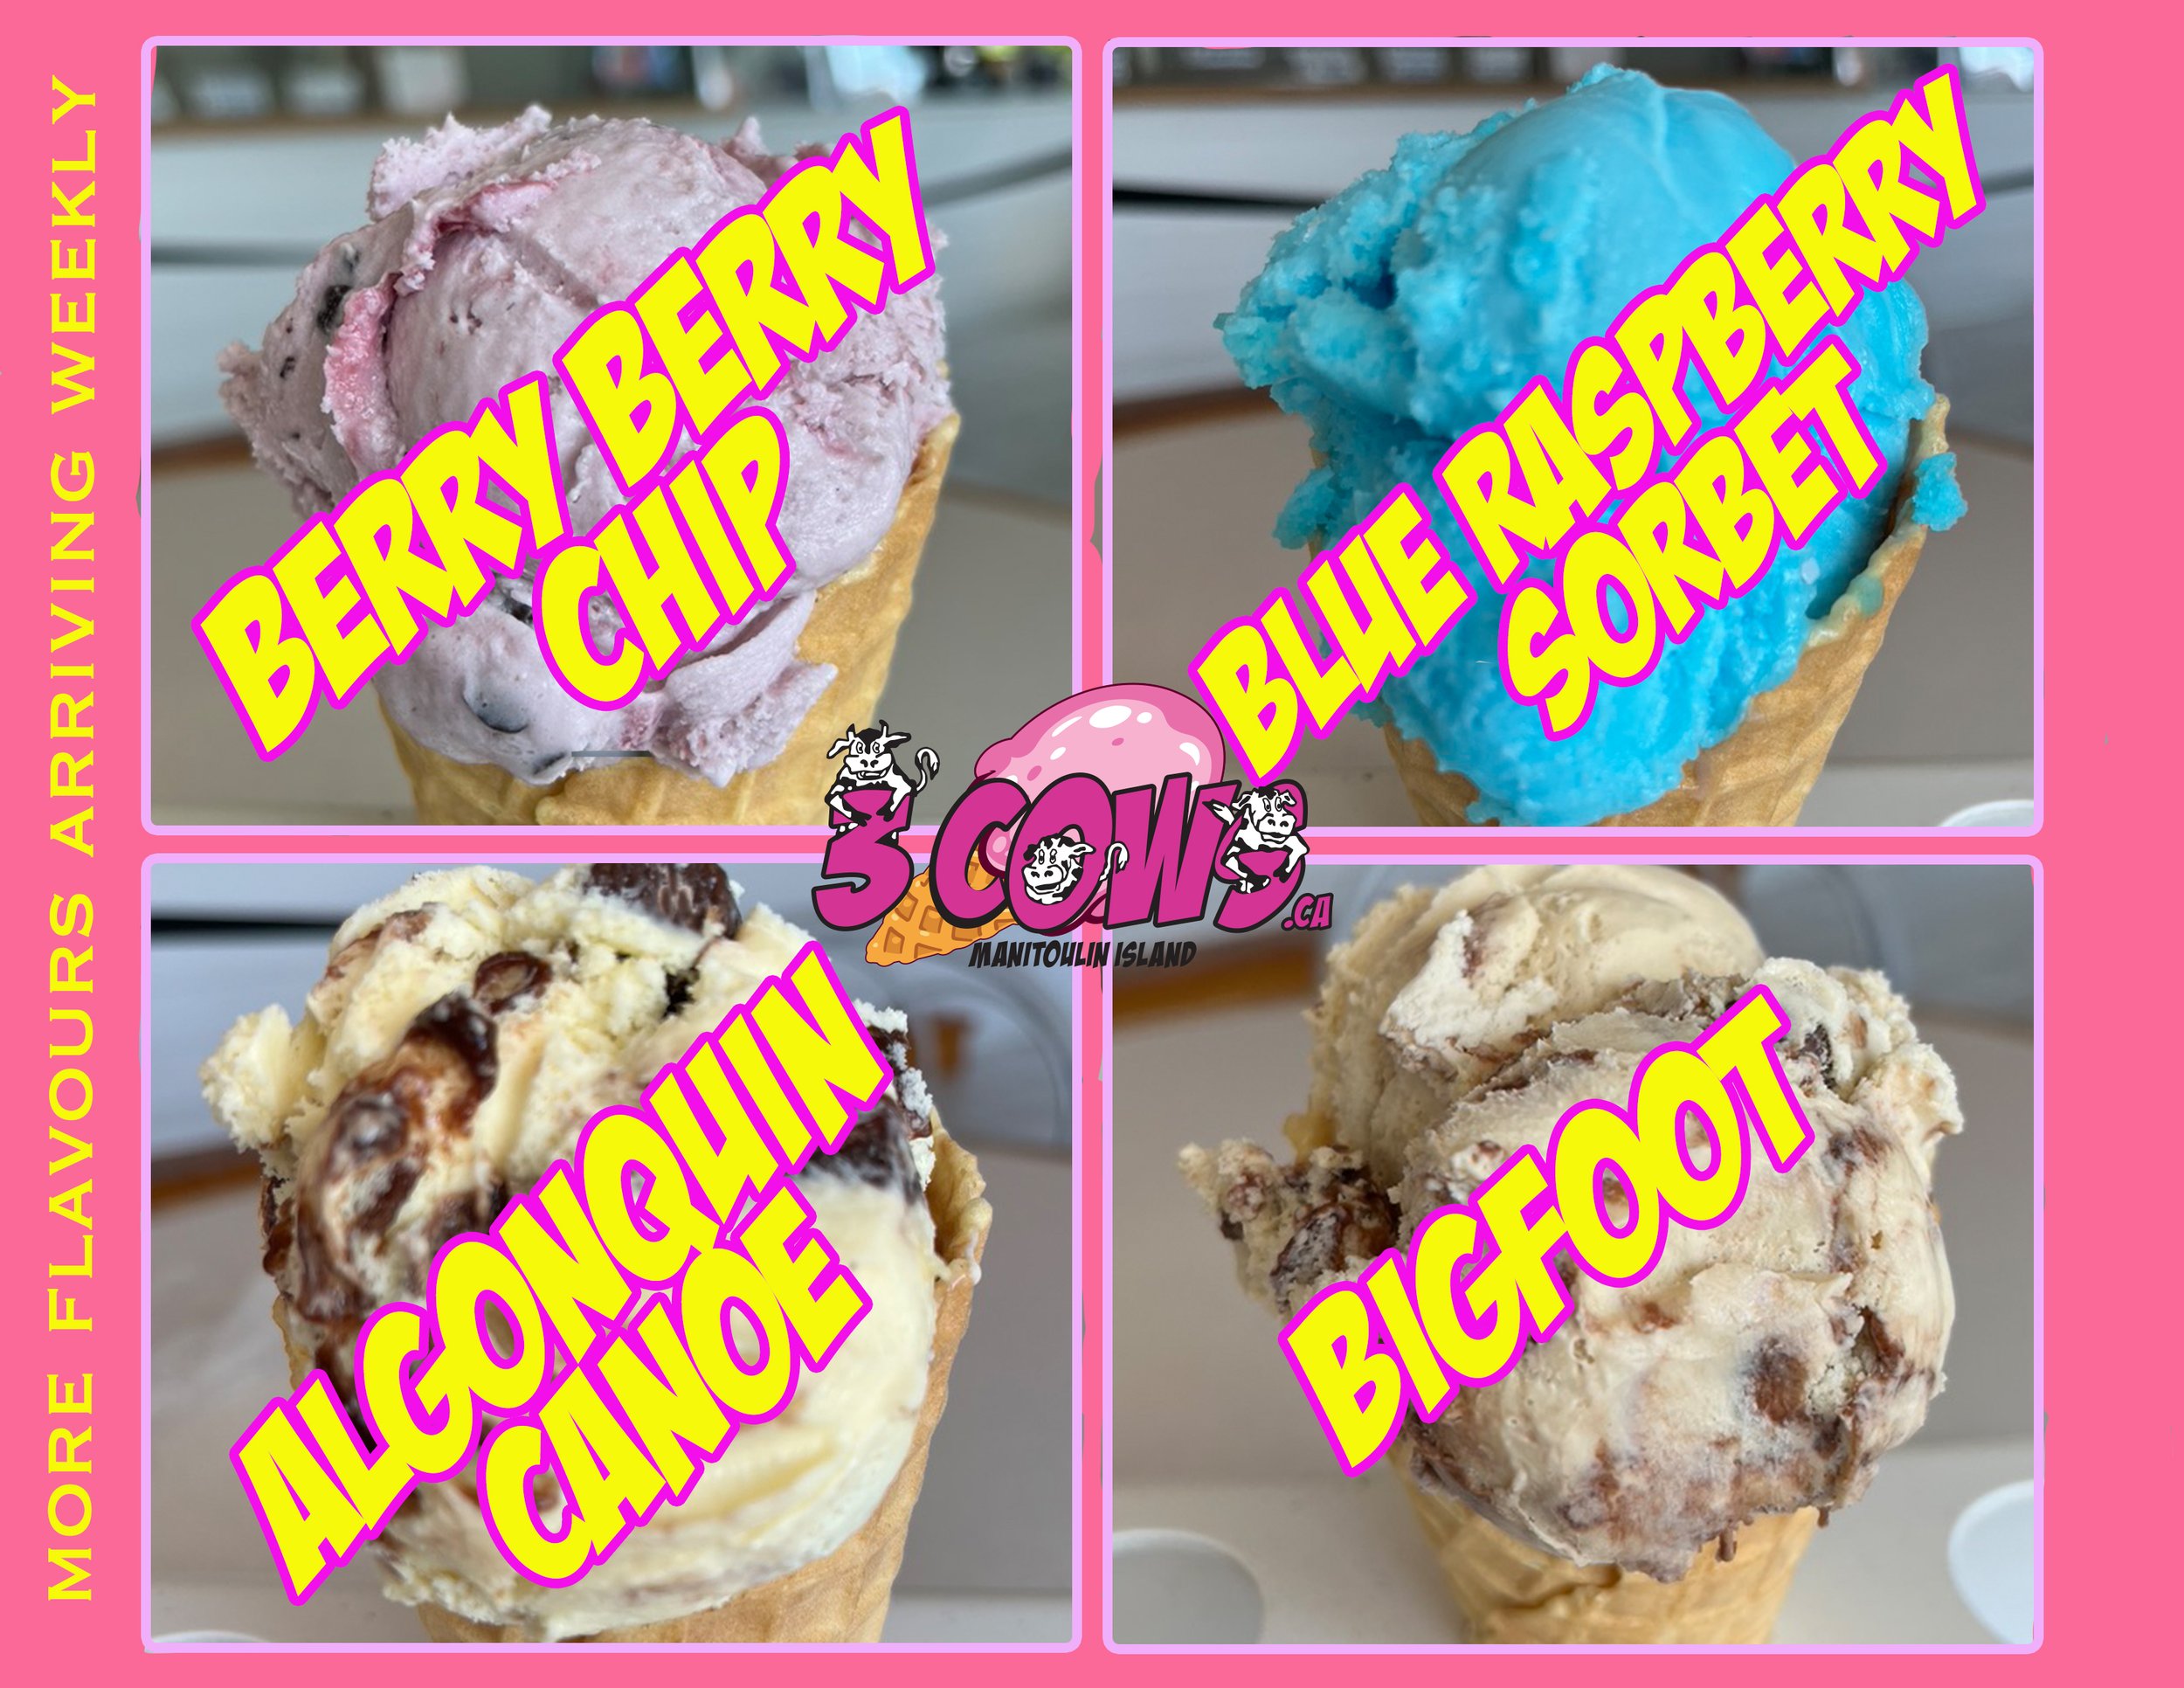 New Flavours Ice Cream.jpg